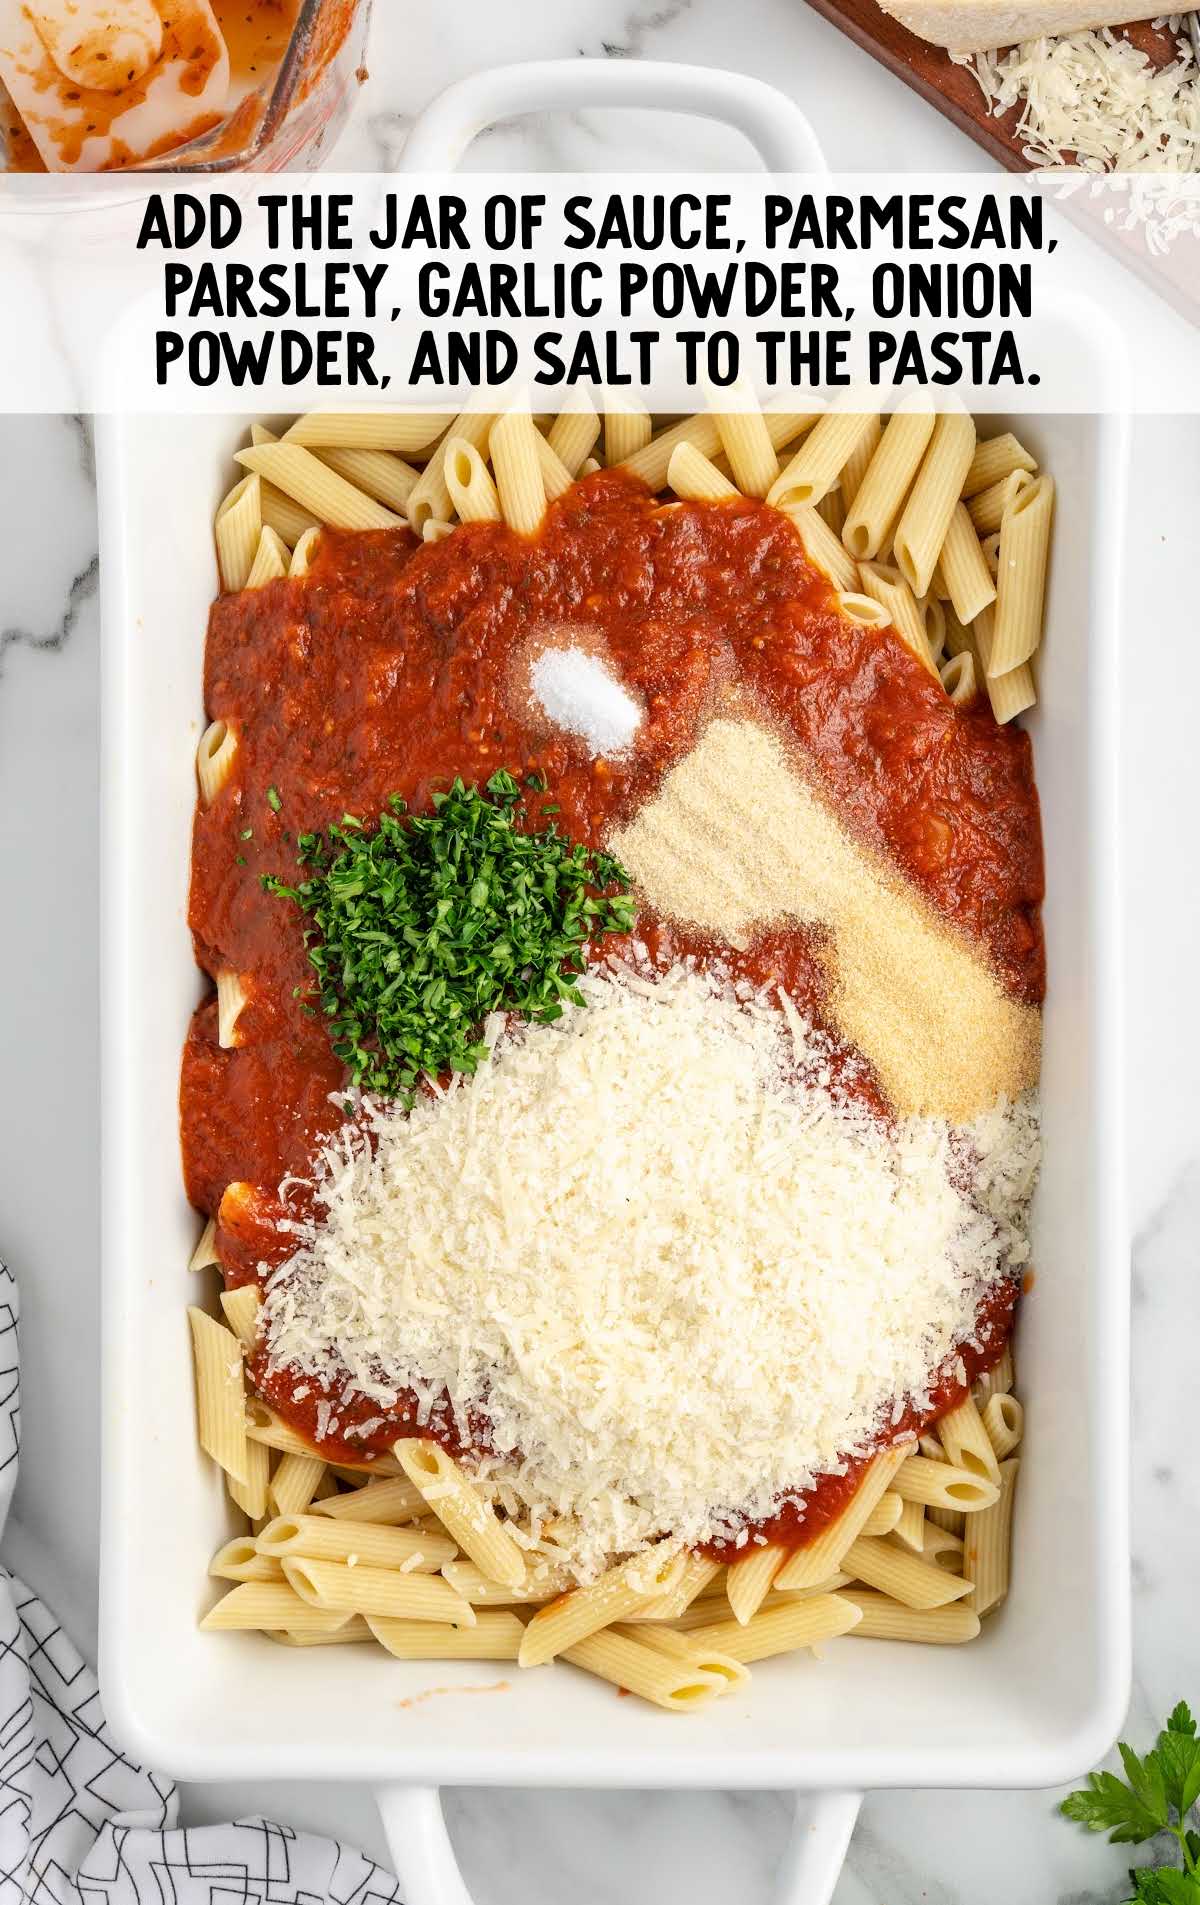 jar of sauce, parmesan, parsley, garlic powder, onion powder, and salt added to the pasta